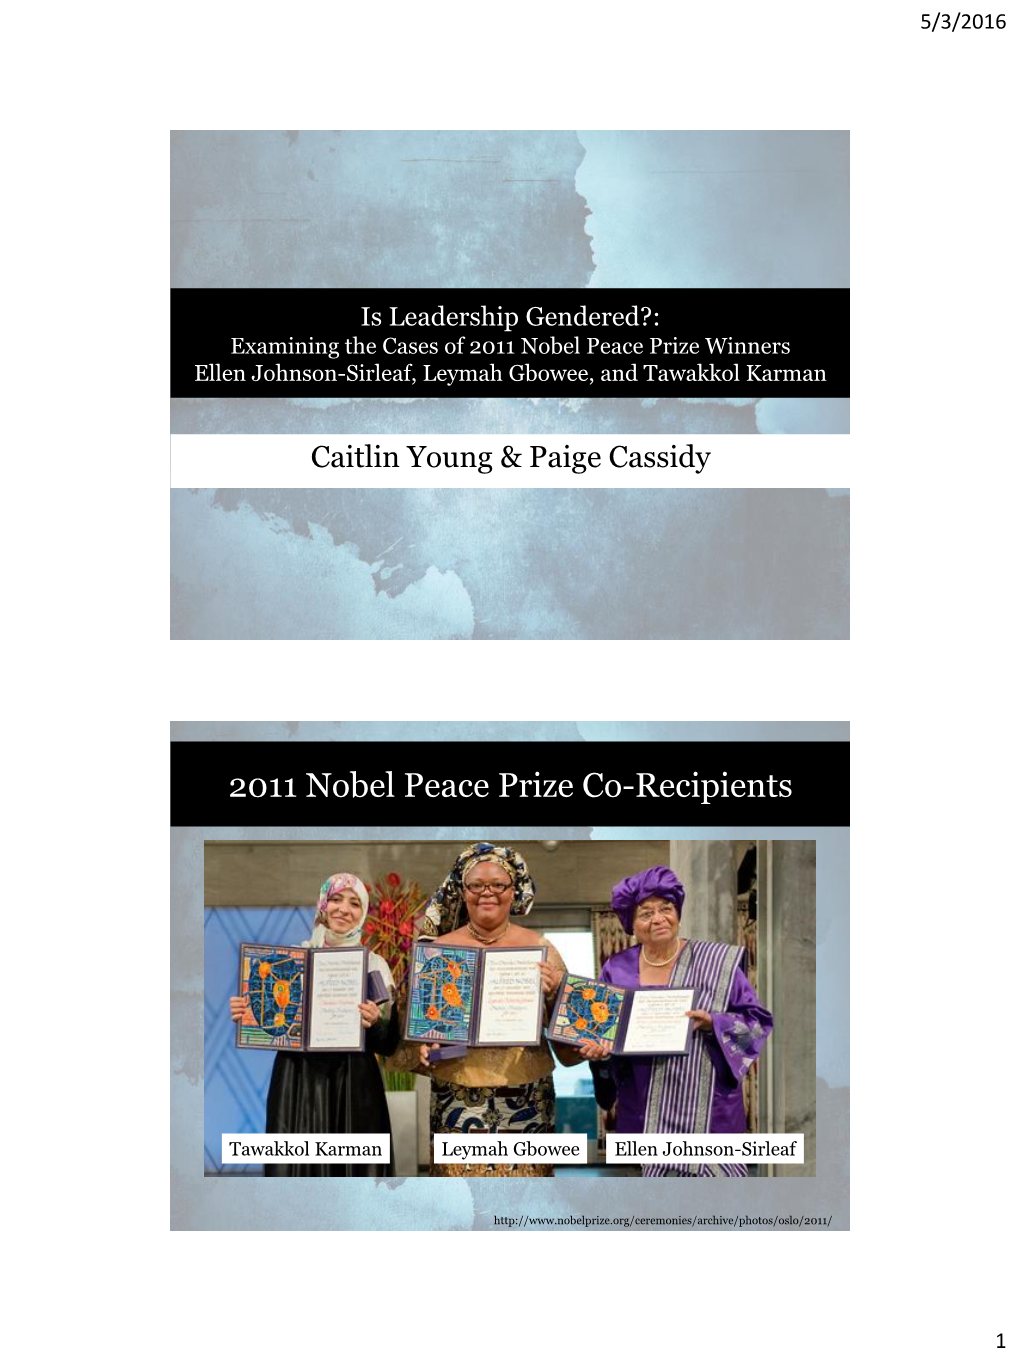 2011 Nobel Peace Prize Co-Recipients